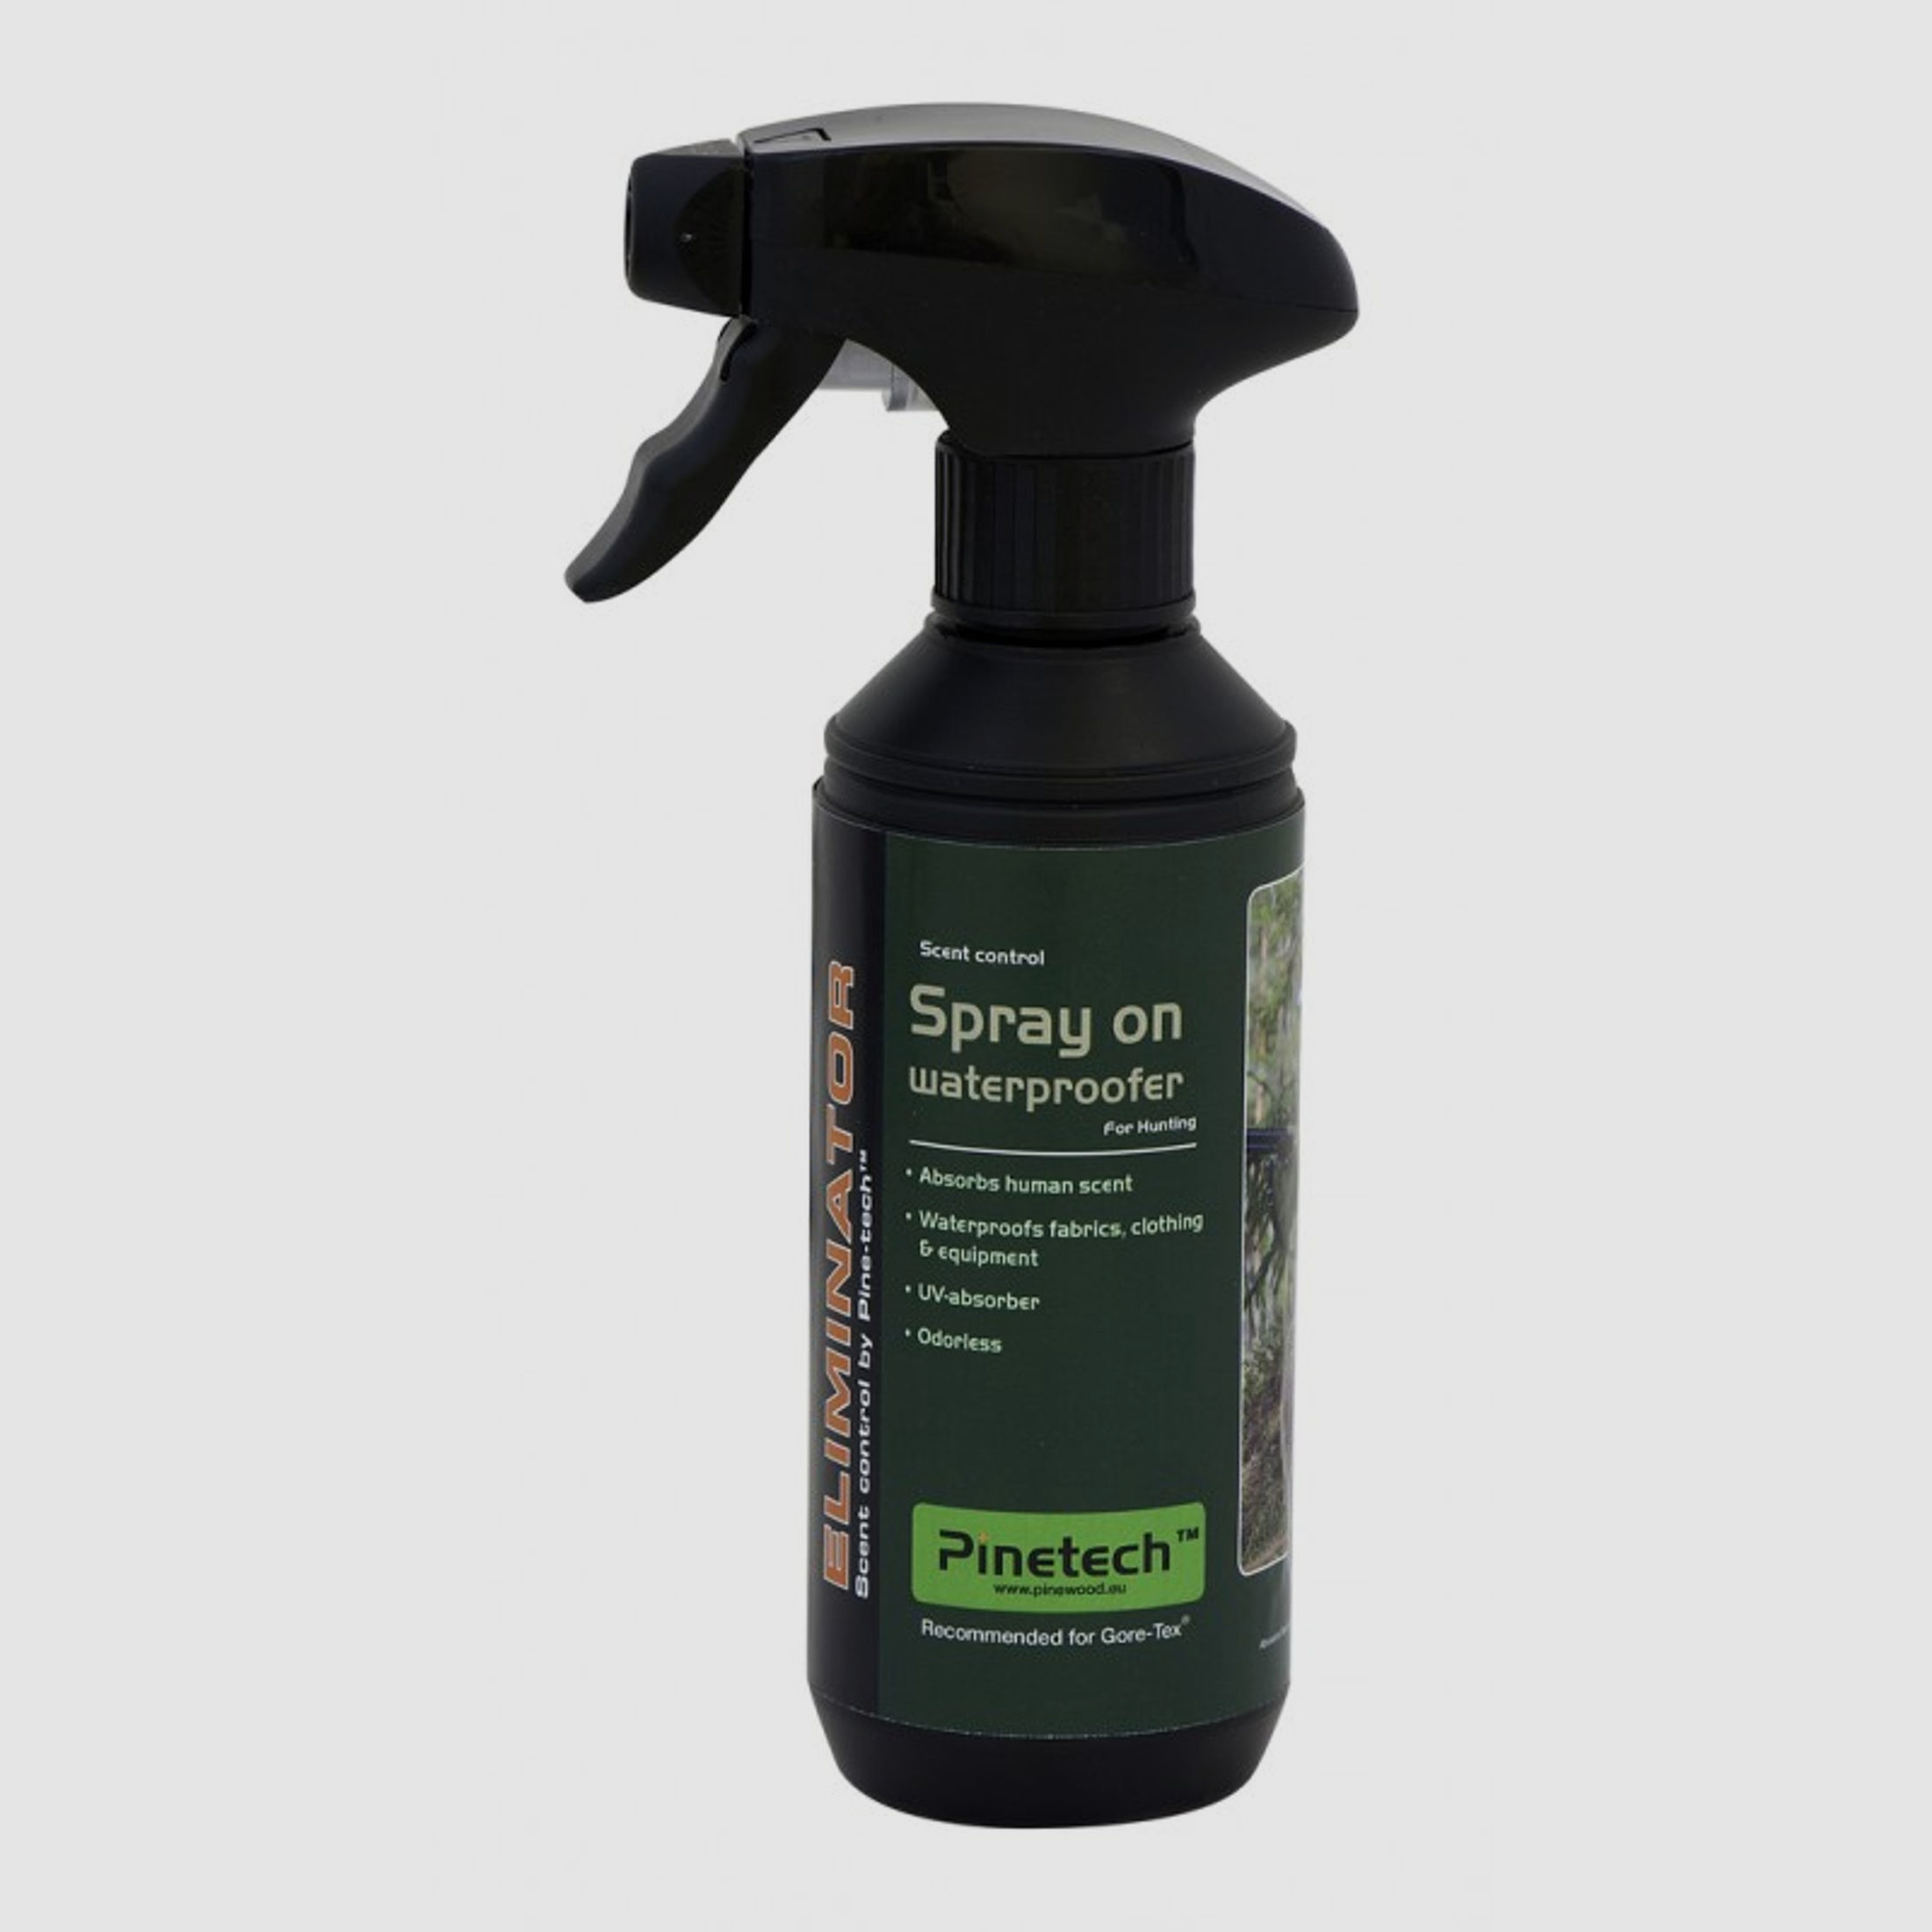 Pinewood Pinetech Imprägnierungs-Spray / Elininator für Jäger